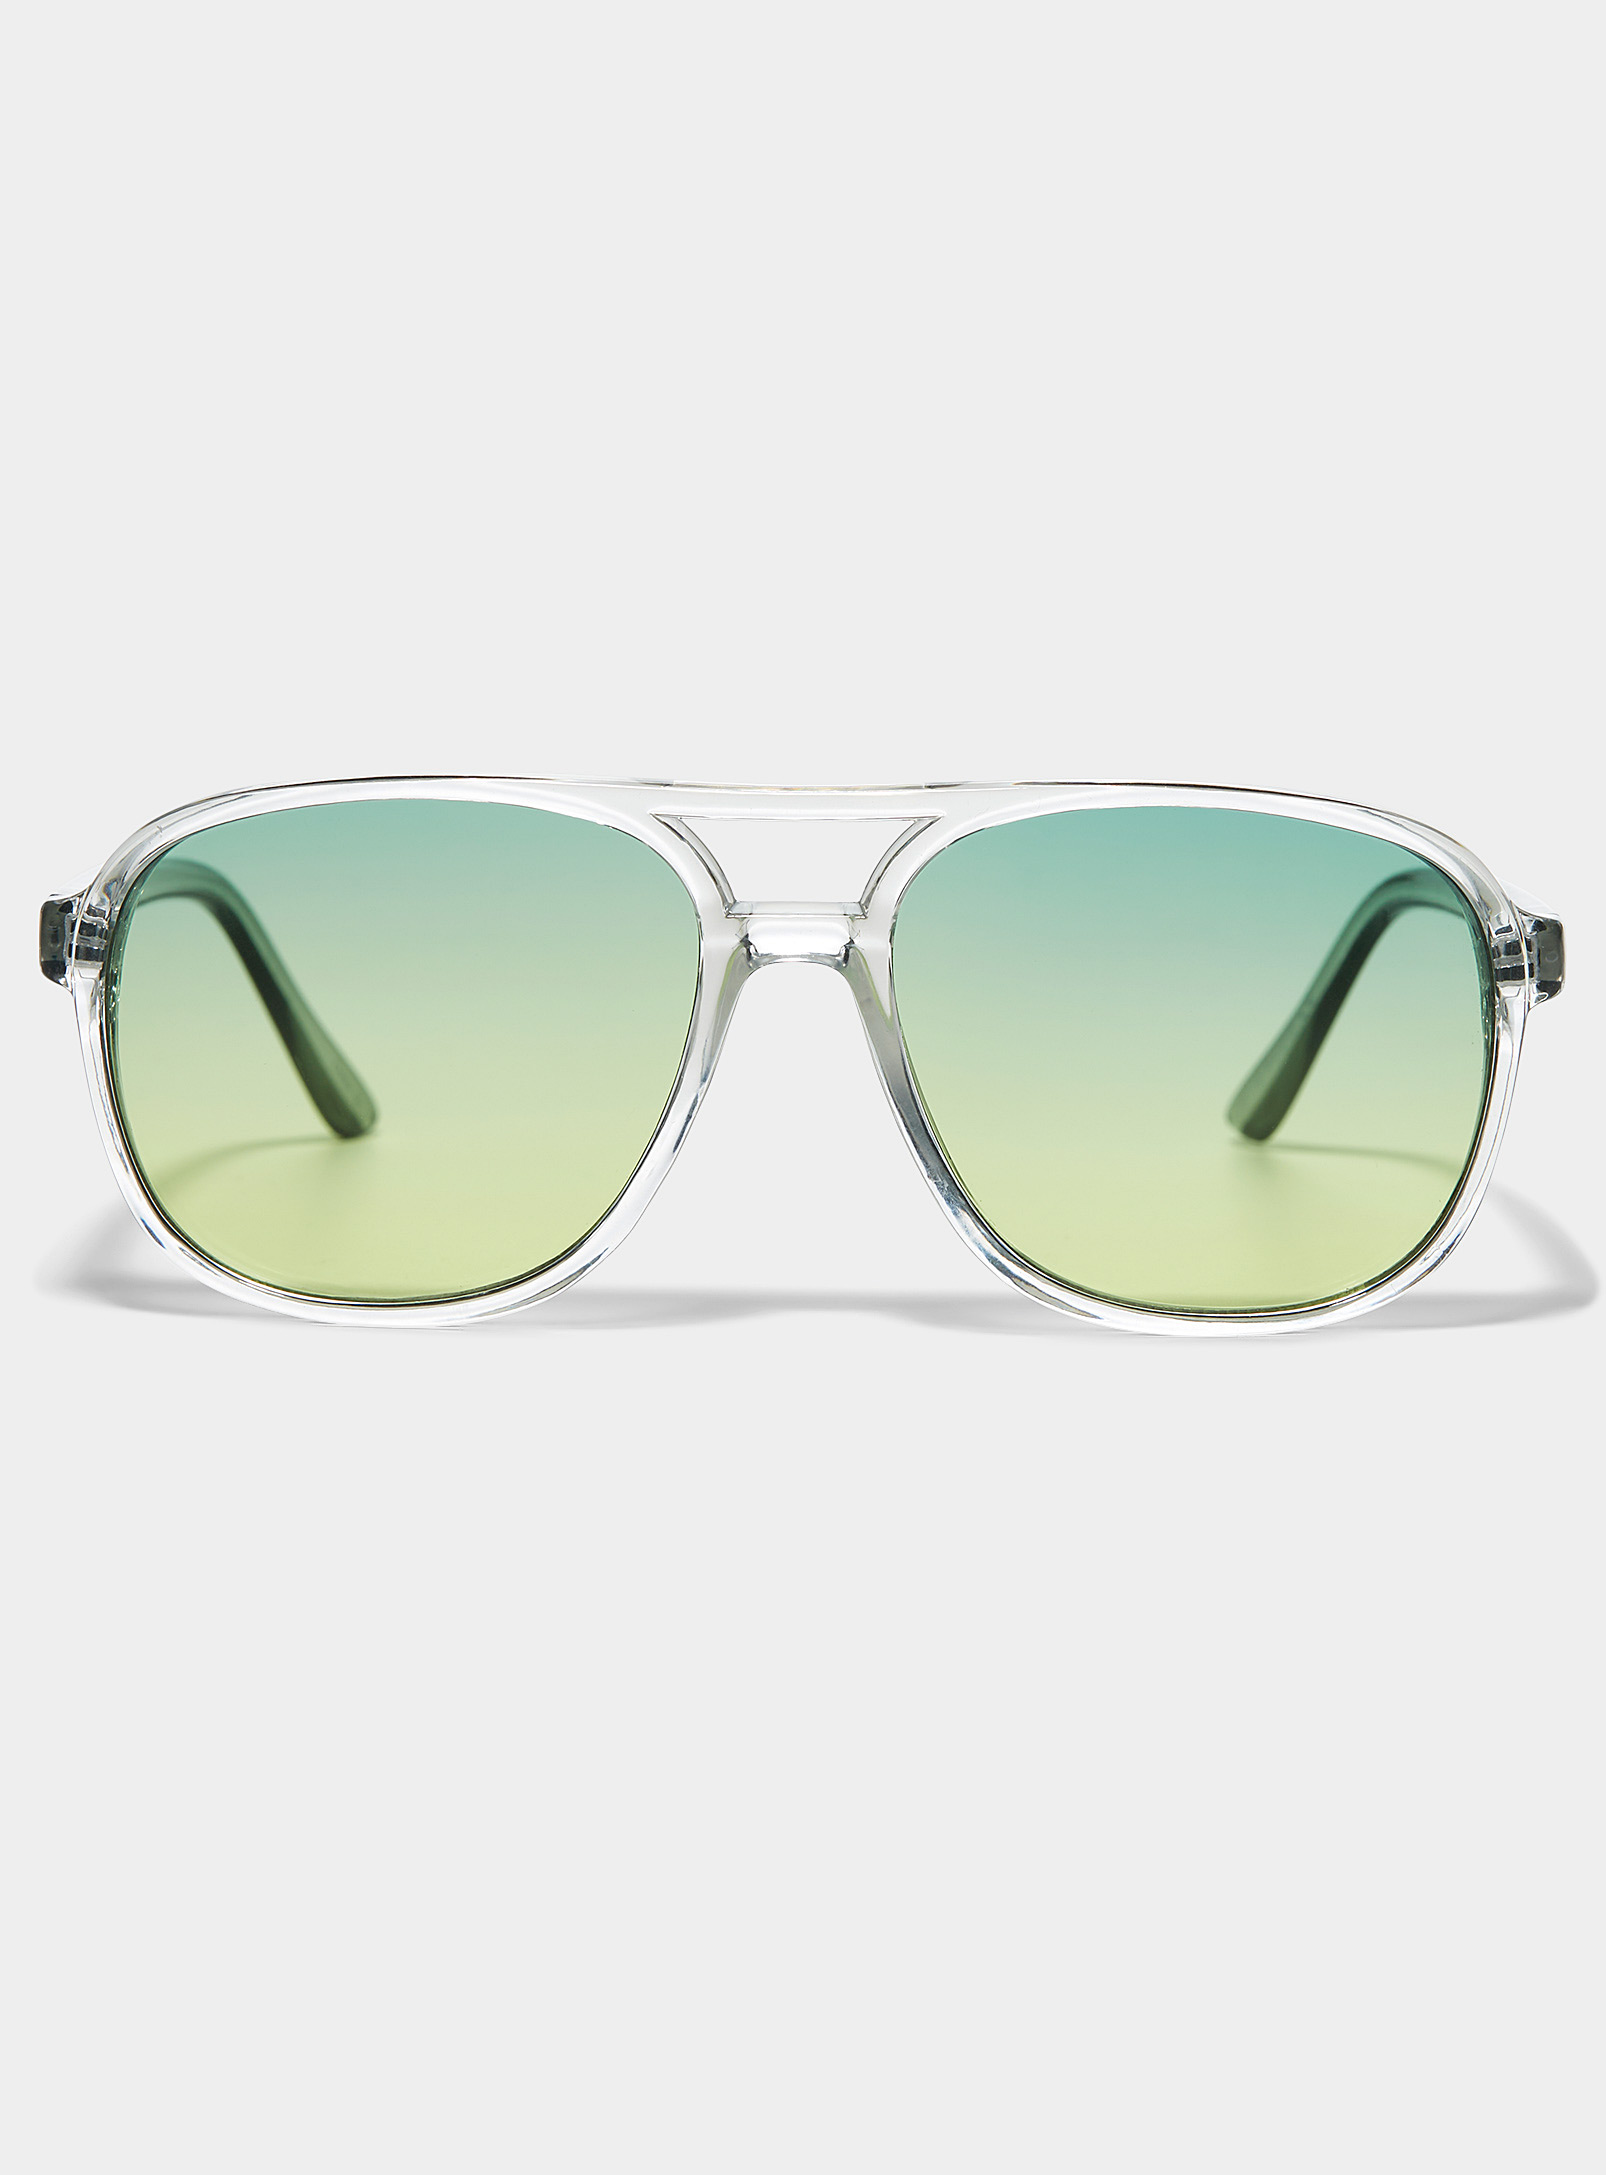 Le 31 Murphy Aviator Sunglasses In White